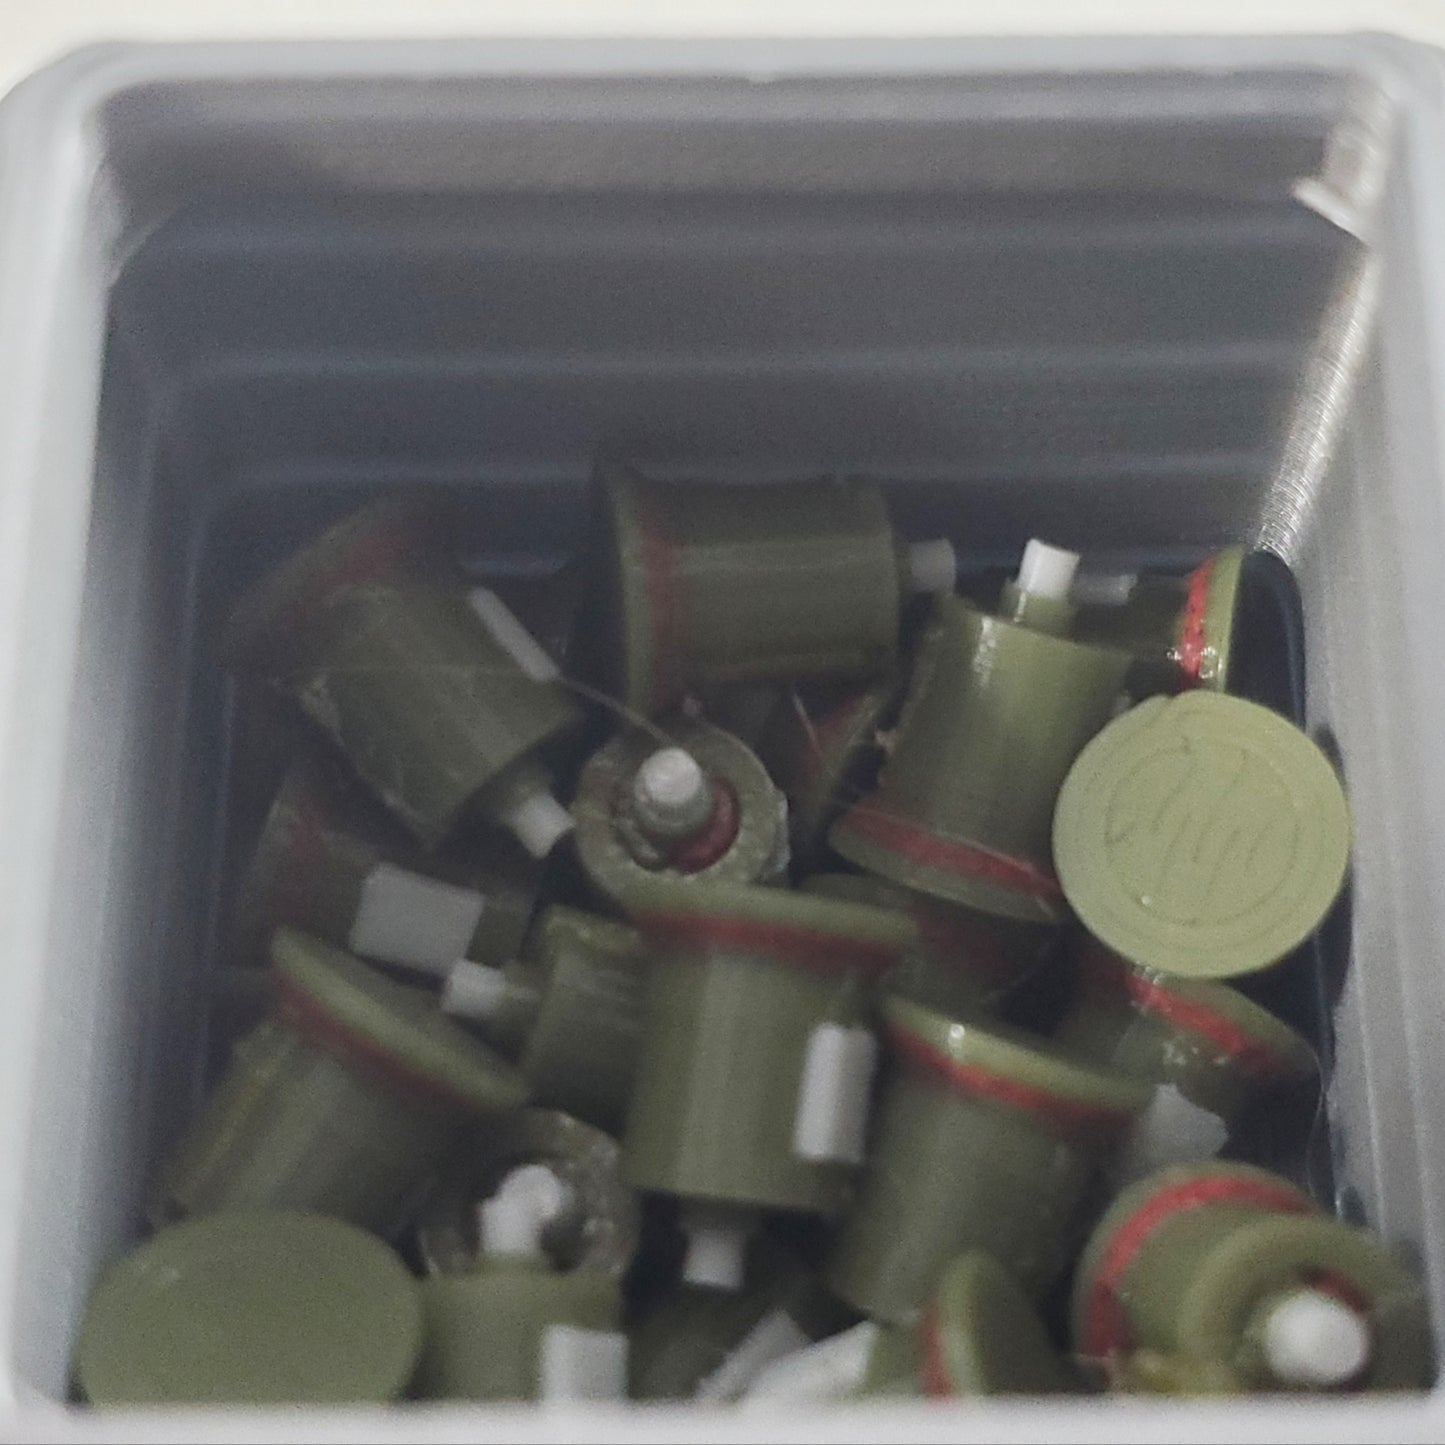 SW Bomb/Ammunitions Crate